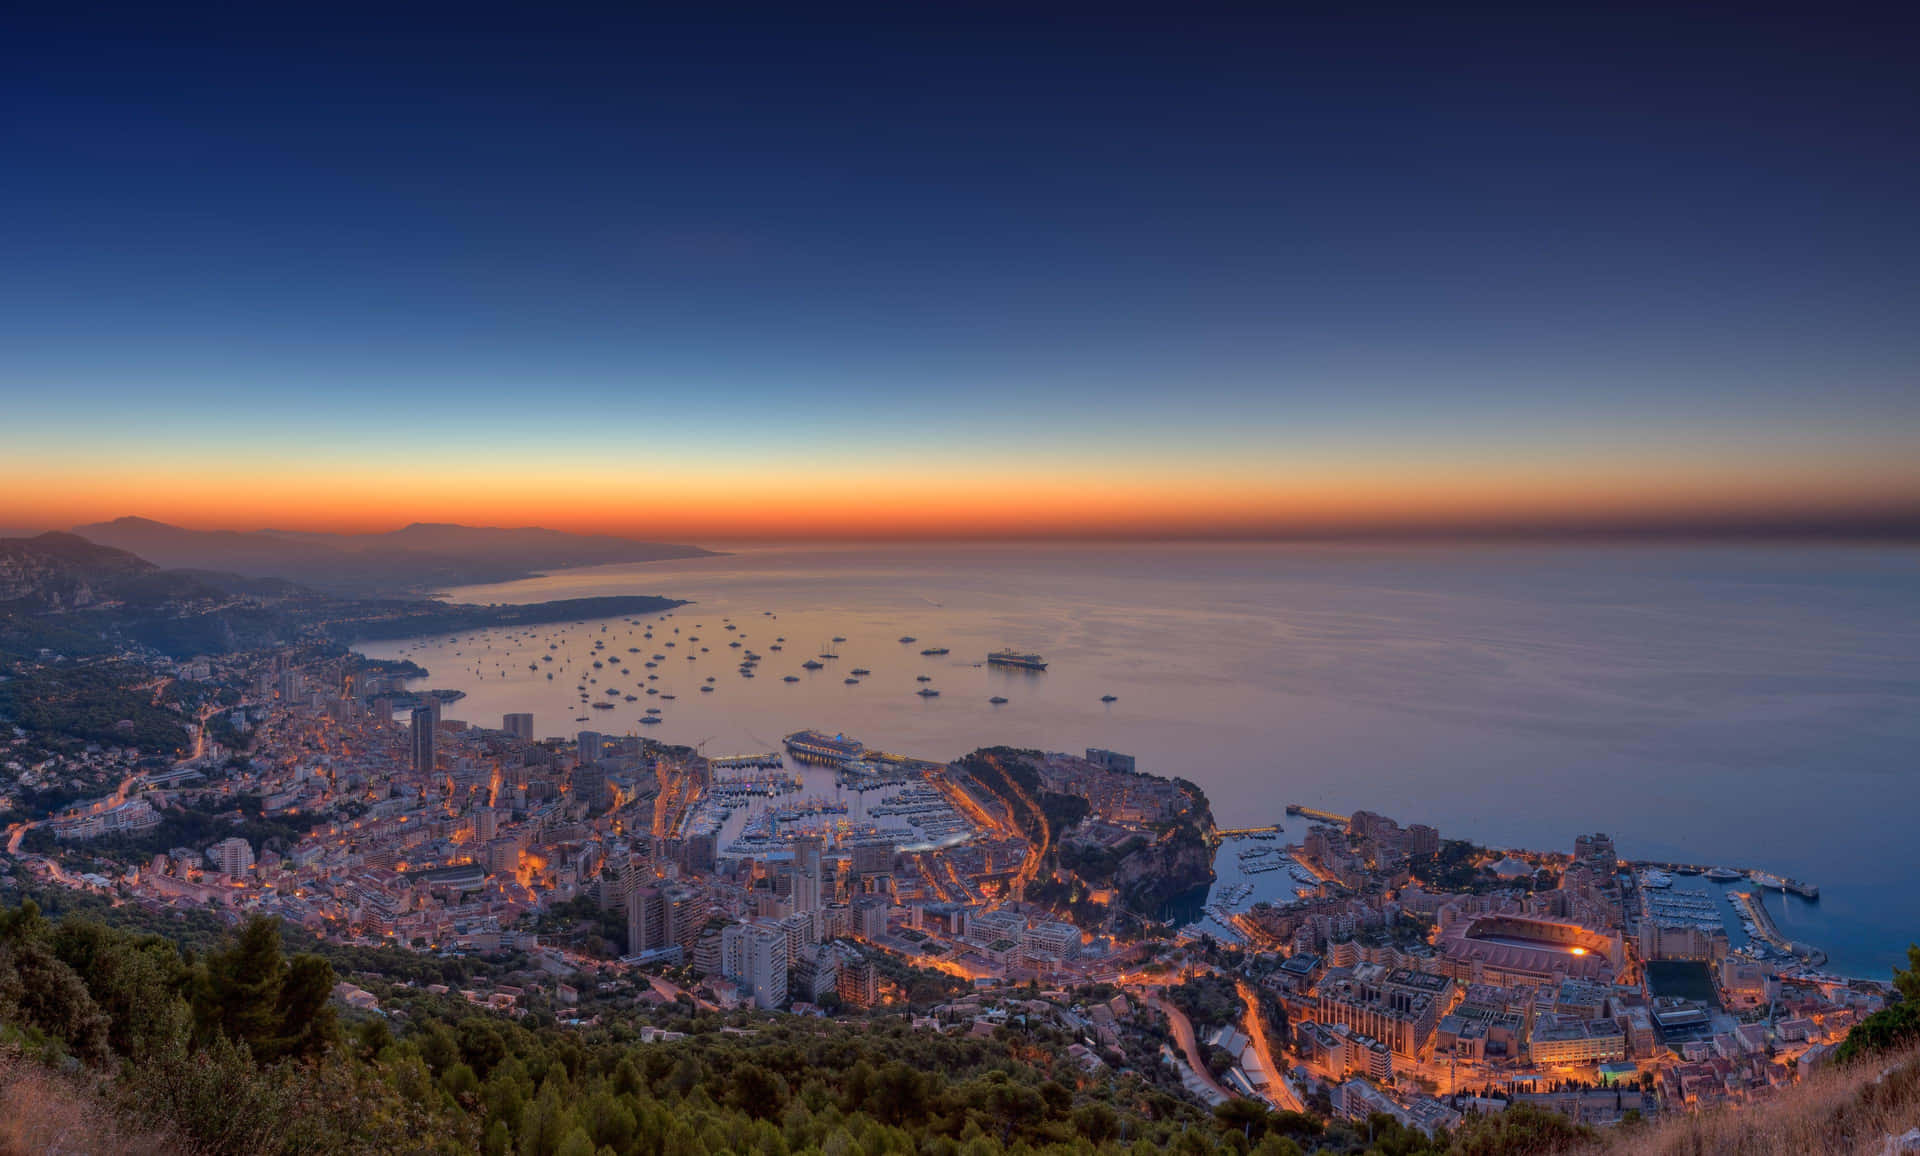 Impresionantepaisaje De La Costa De Mónaco